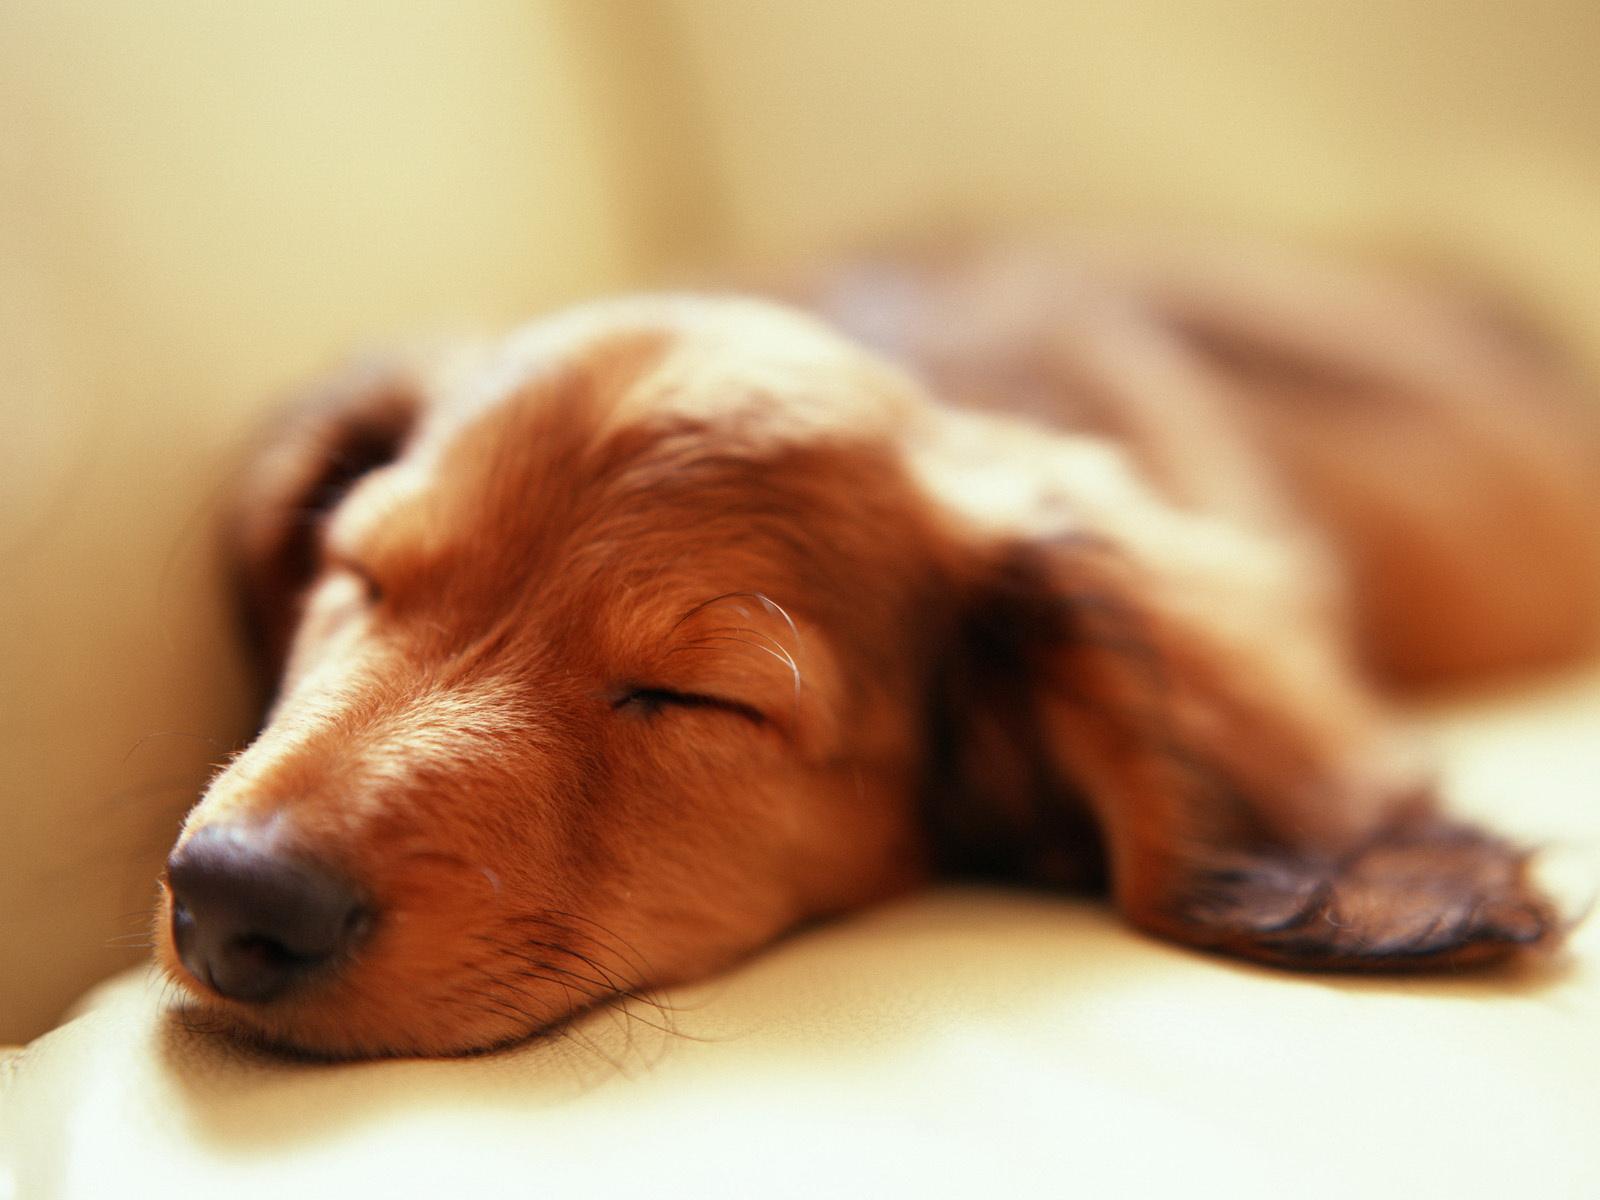 http://3.bp.blogspot.com/-rbxvT6-rydI/T1xpgMQo2xI/AAAAAAAABhE/yansl_d9Uok/s1600/Best+sleeping+dog+wallpaper.jpg